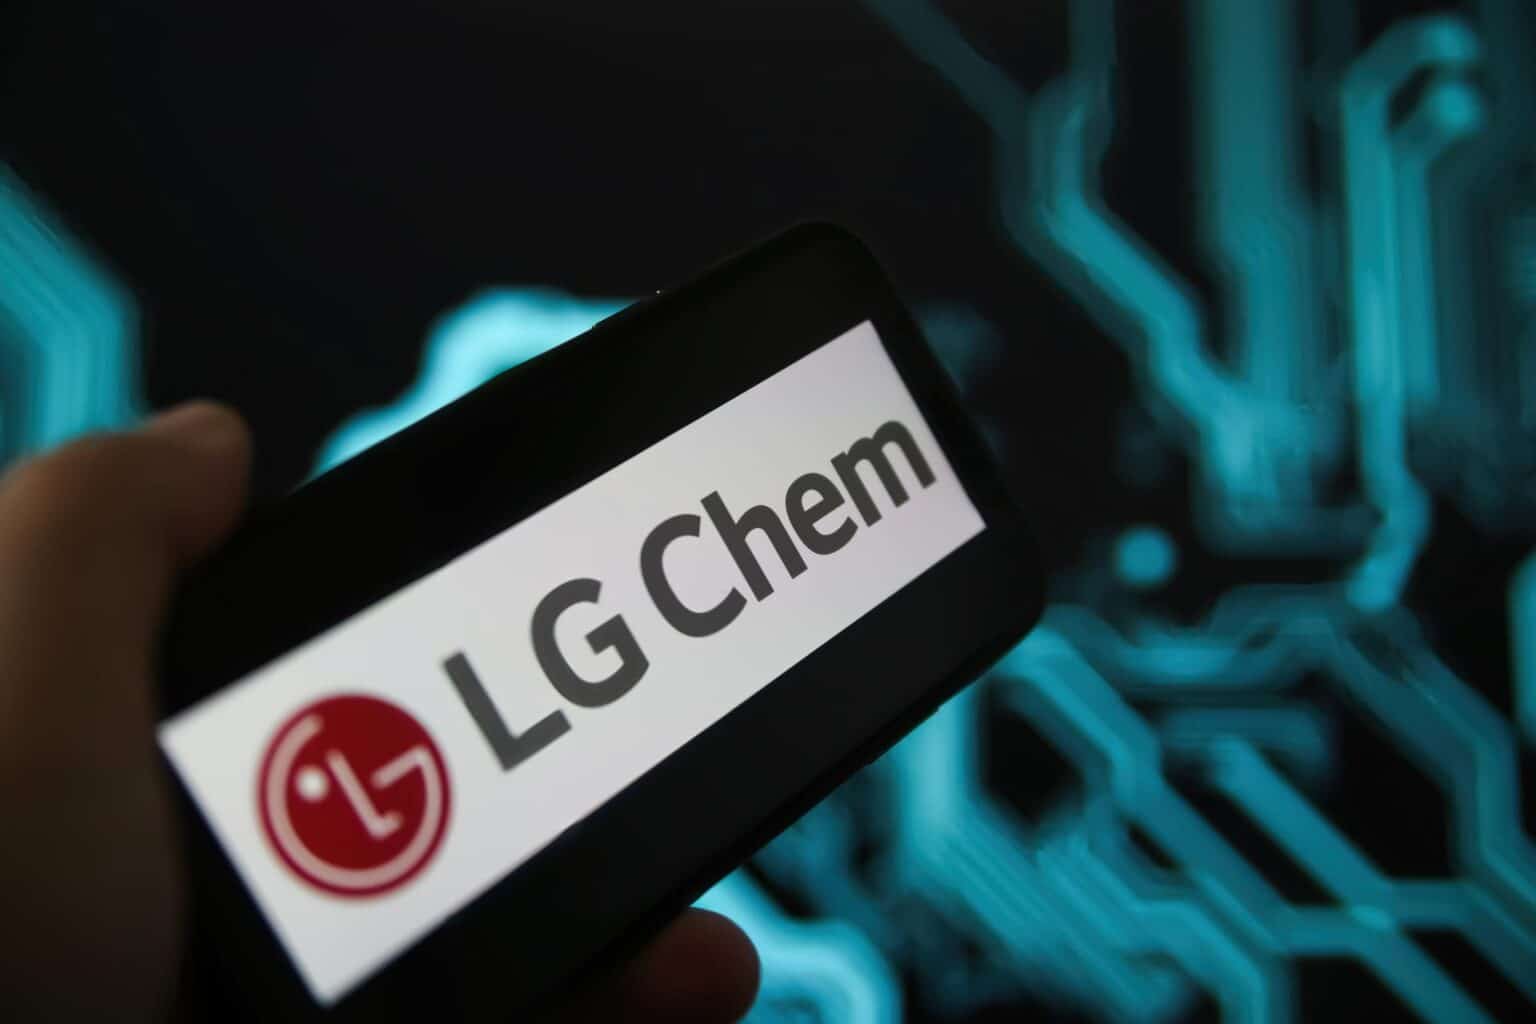 LG Chem enthüllt Pläne zur globalen Expansion